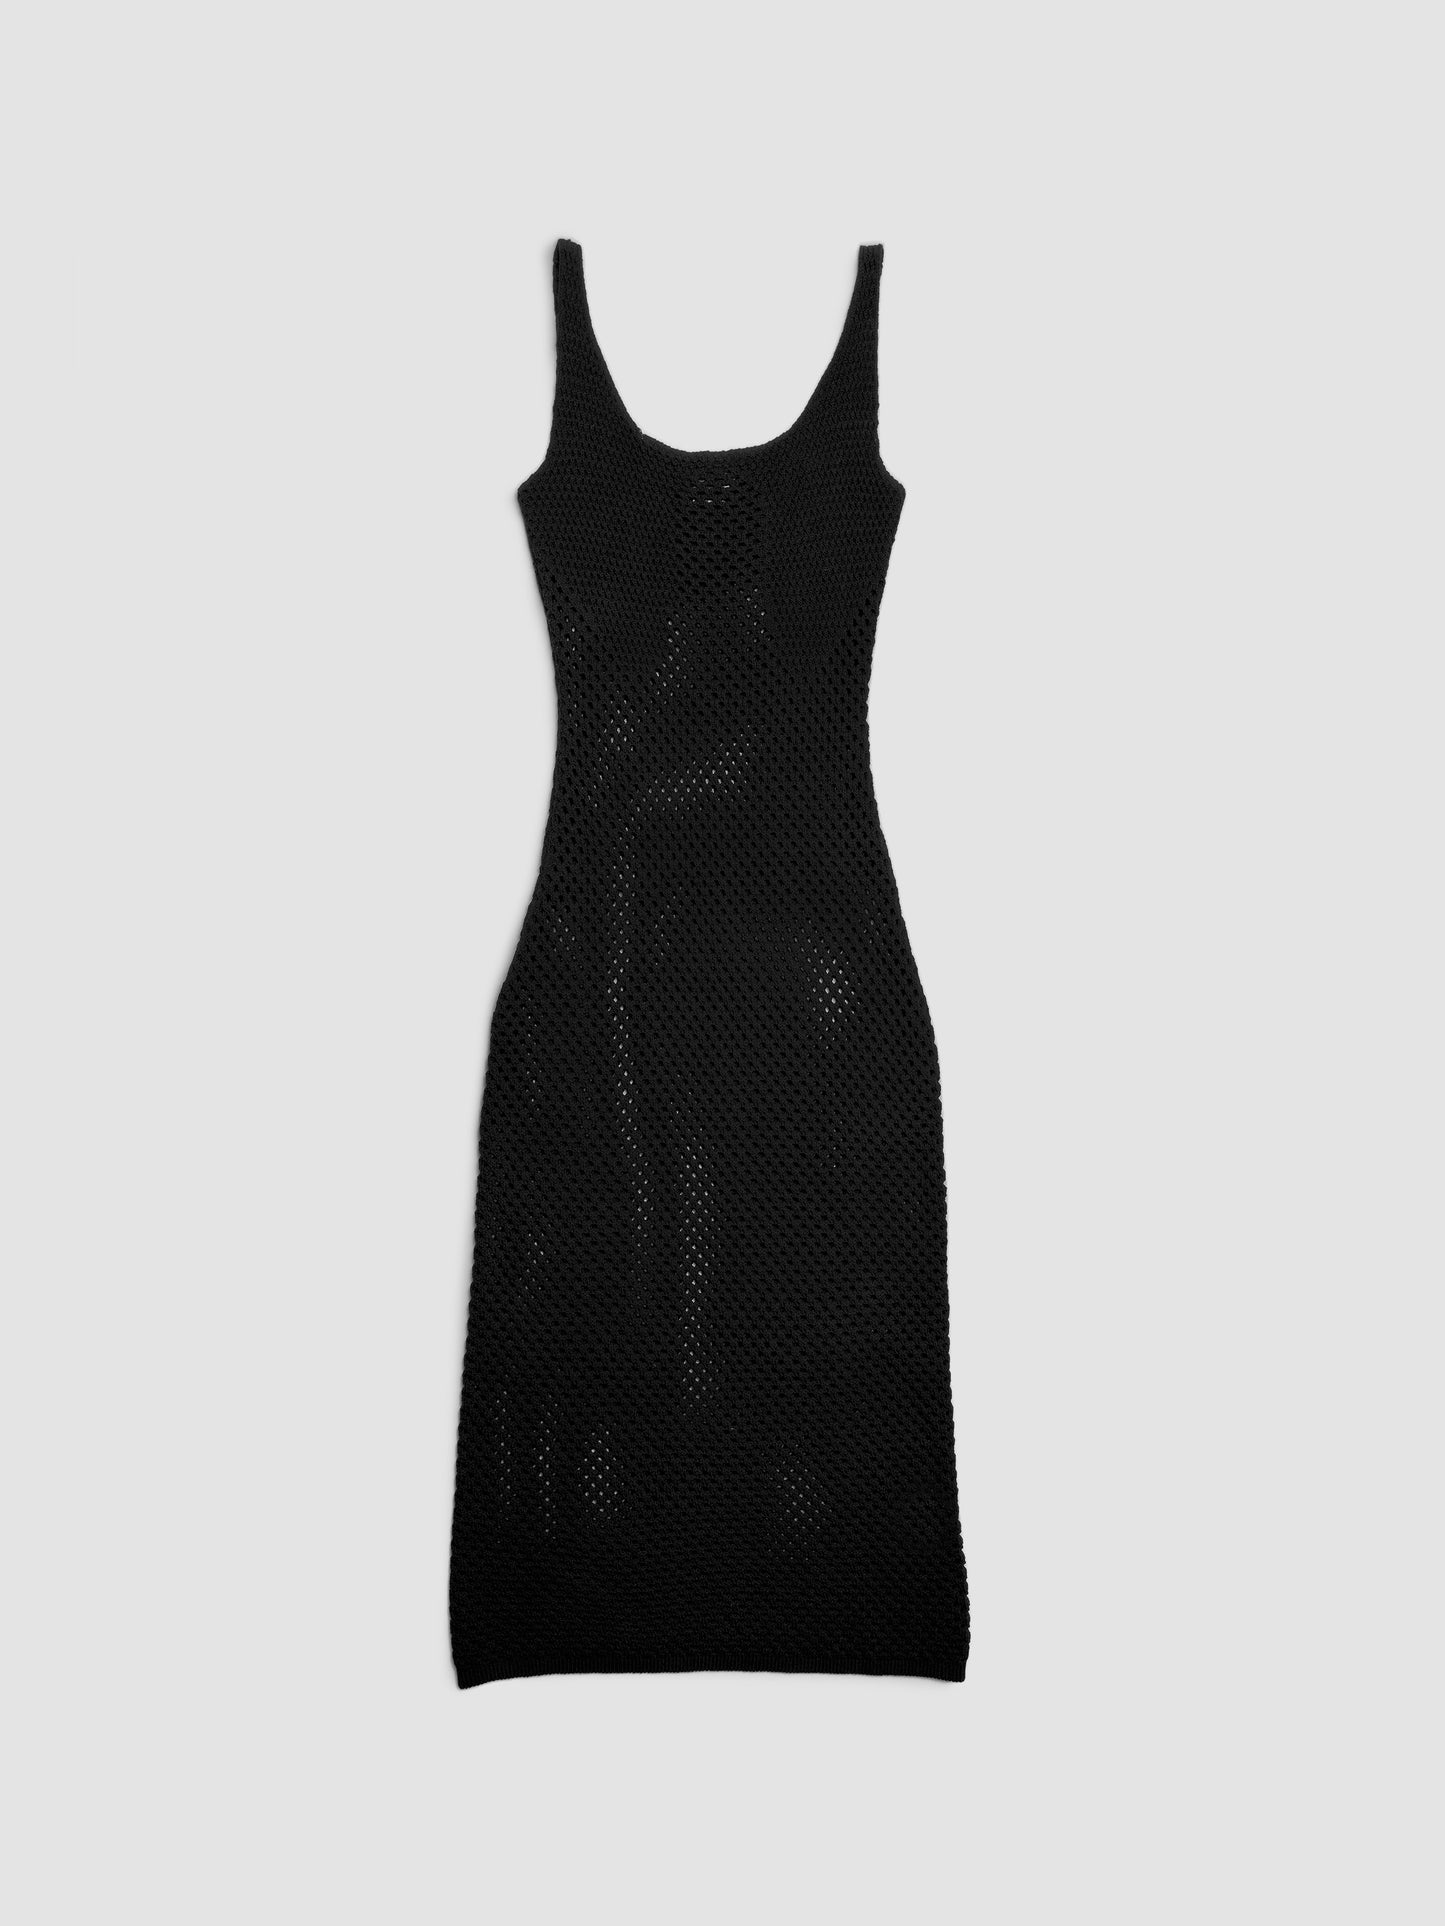 St. Barth Black Dress